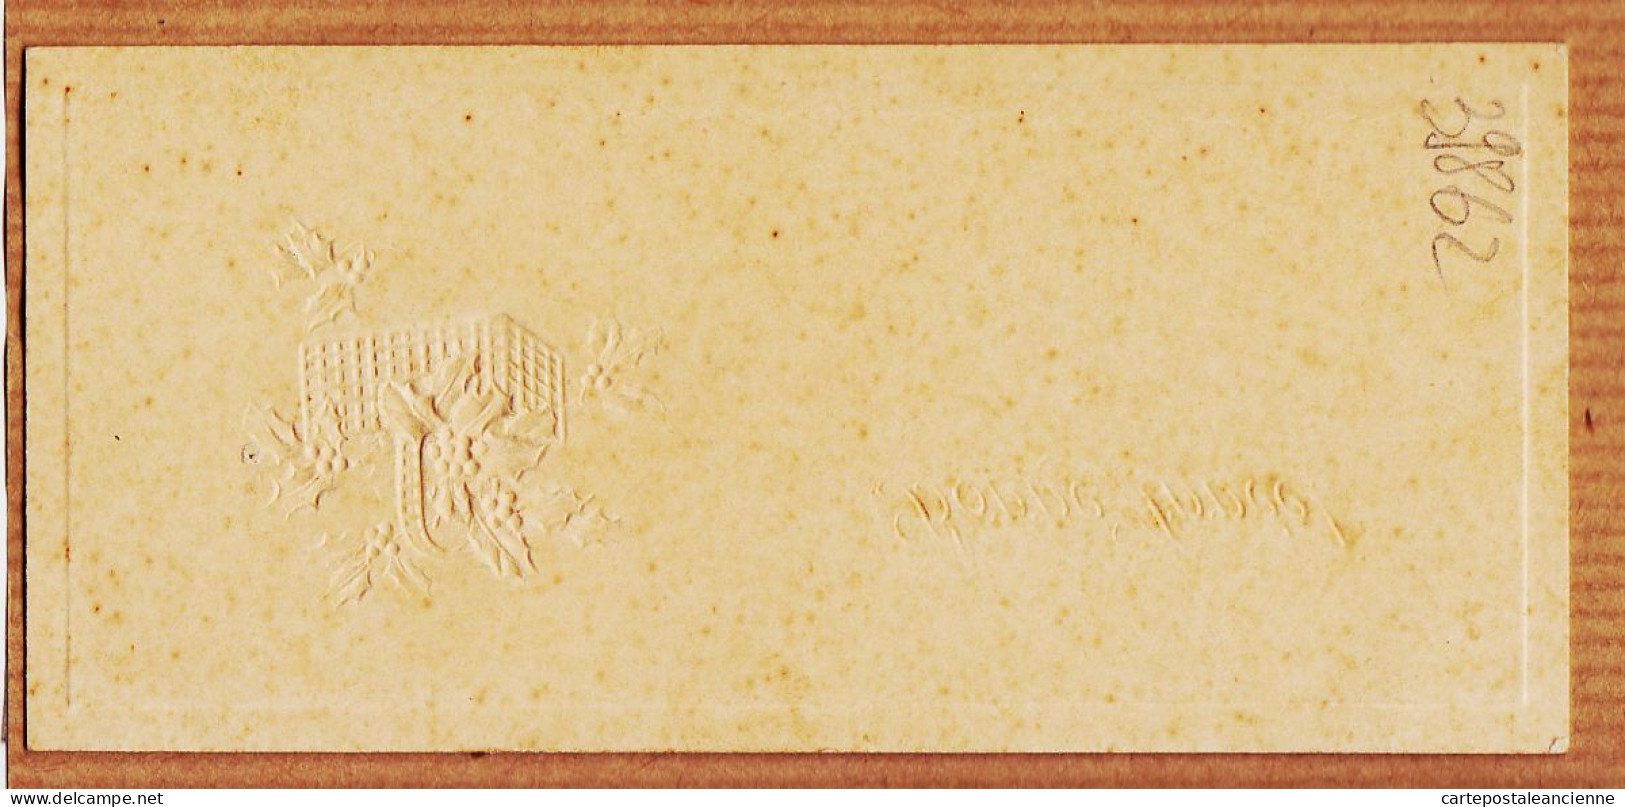 38744  / ⭐ Embossed BONNE ANNEE (Format 13x6cm) 1910s  De R. VECKMAN  - New Year